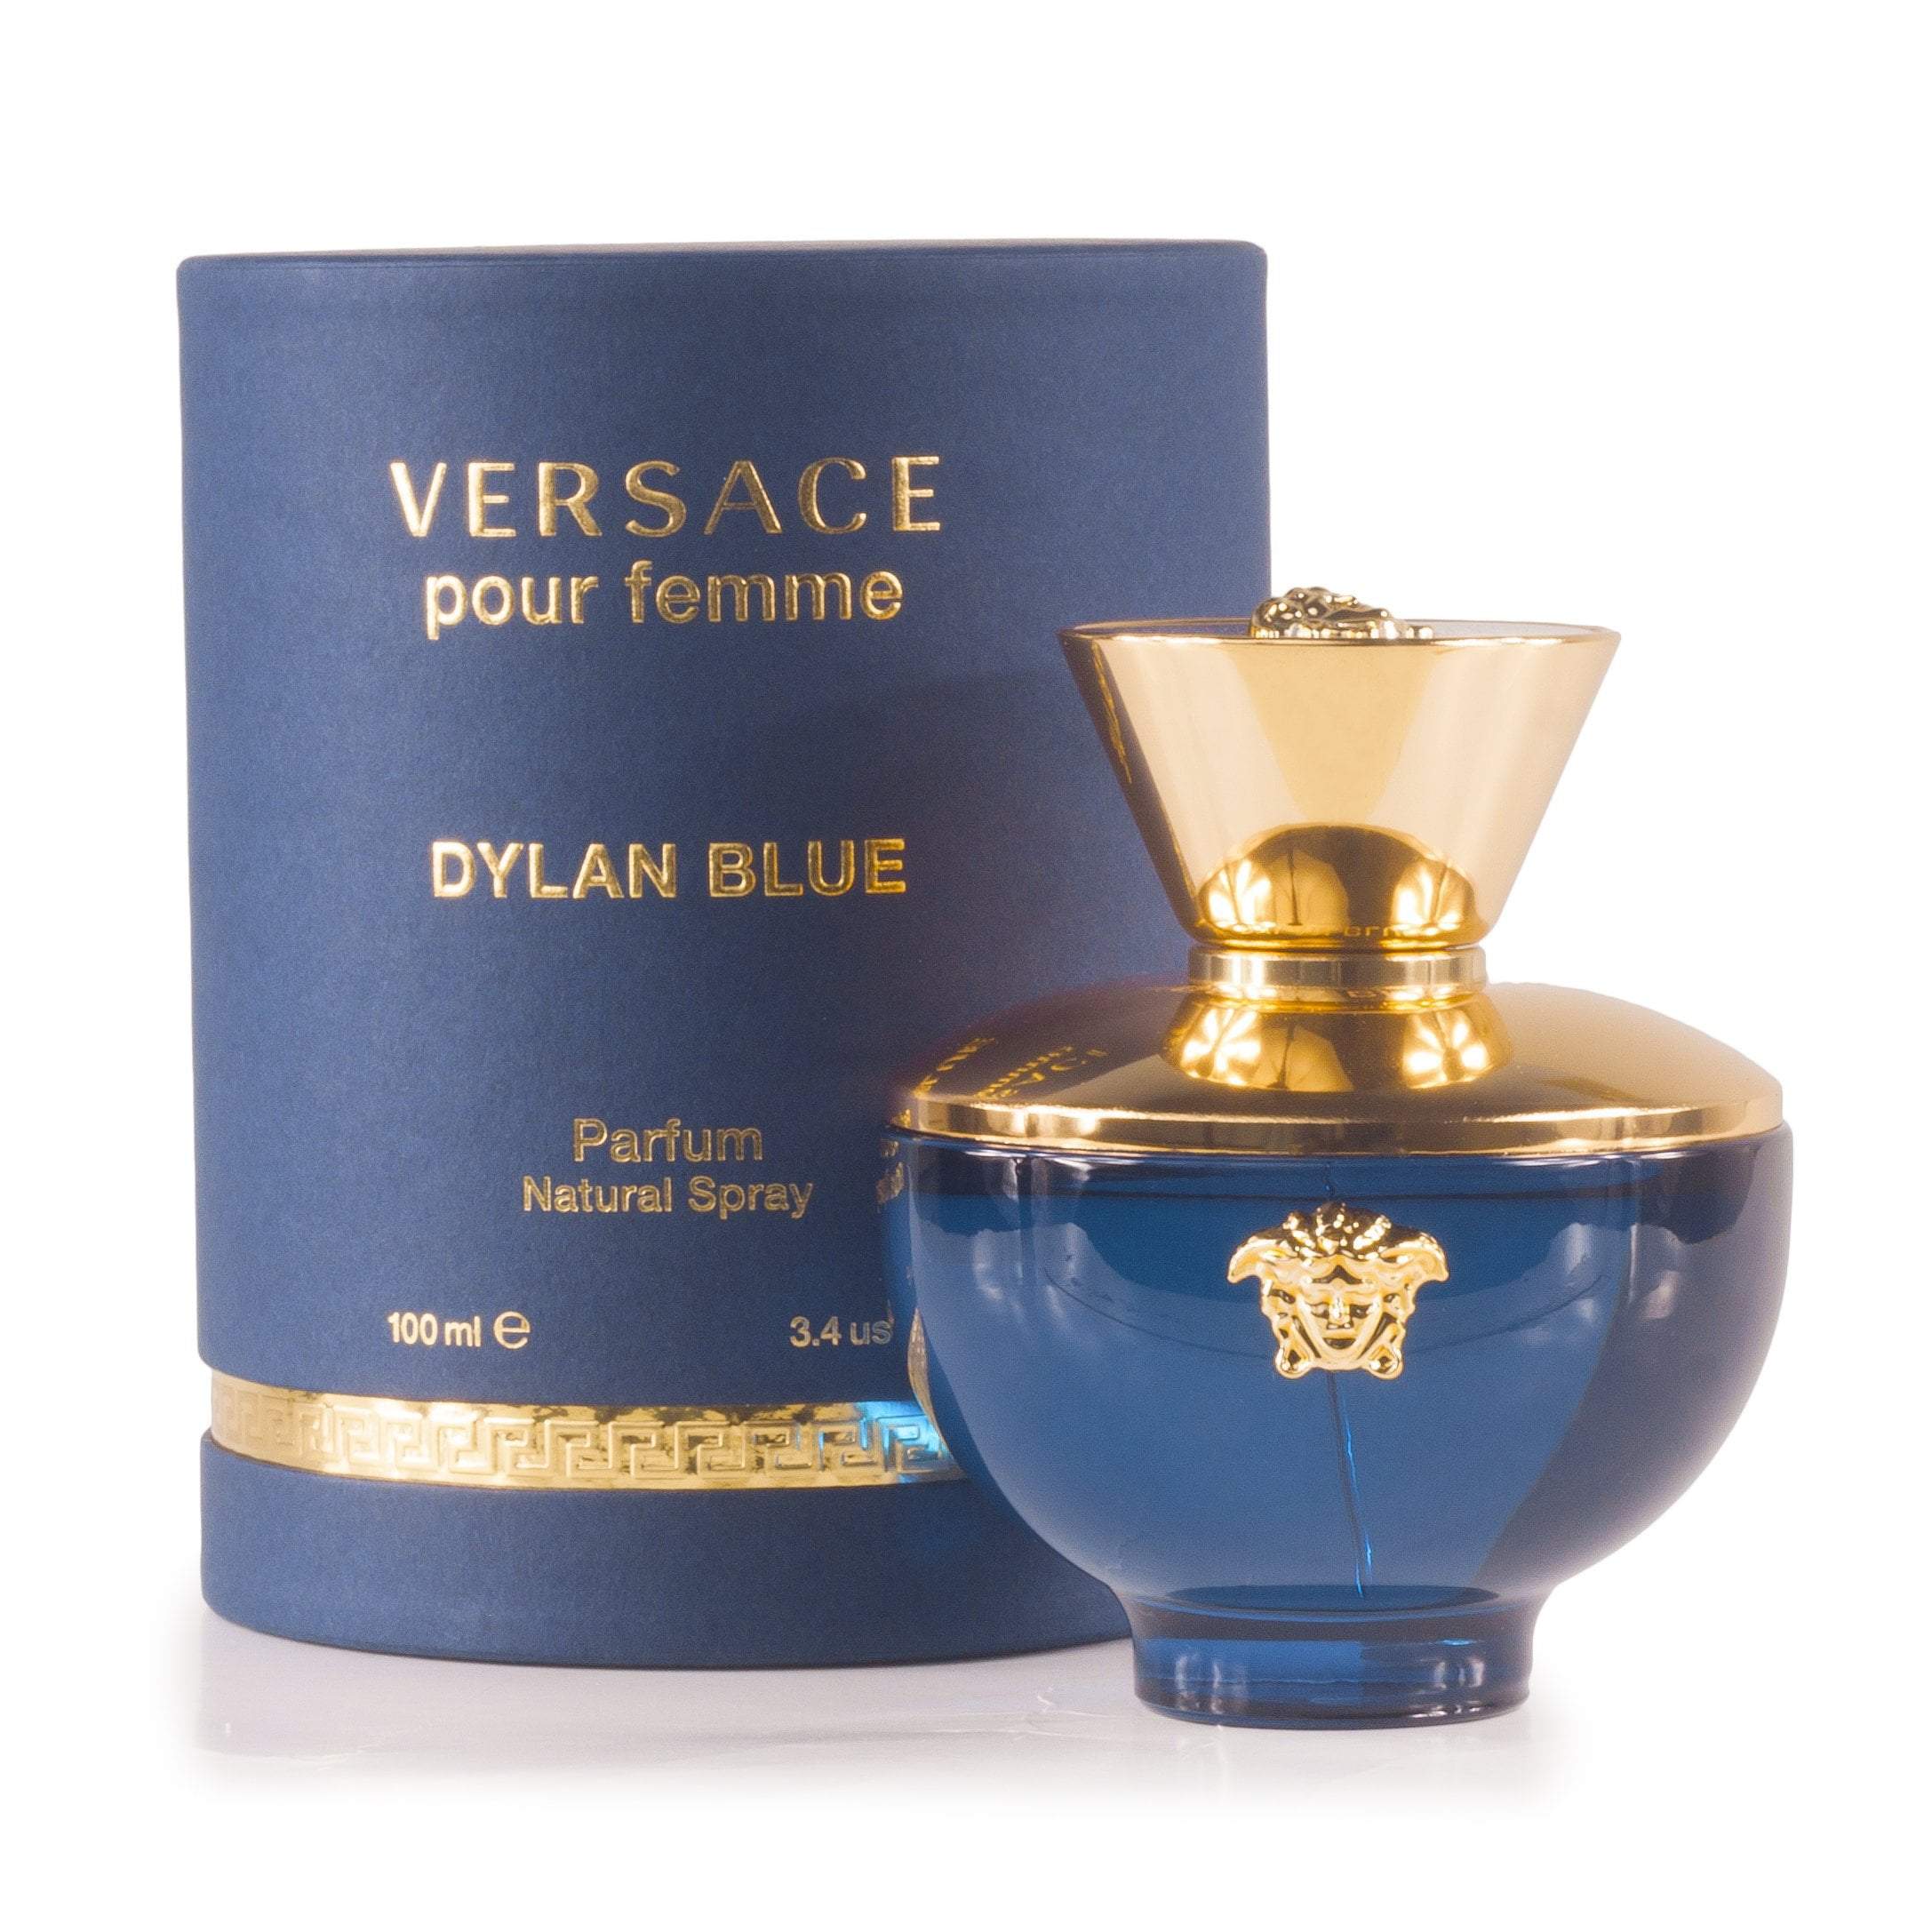 versace perfume new 2019